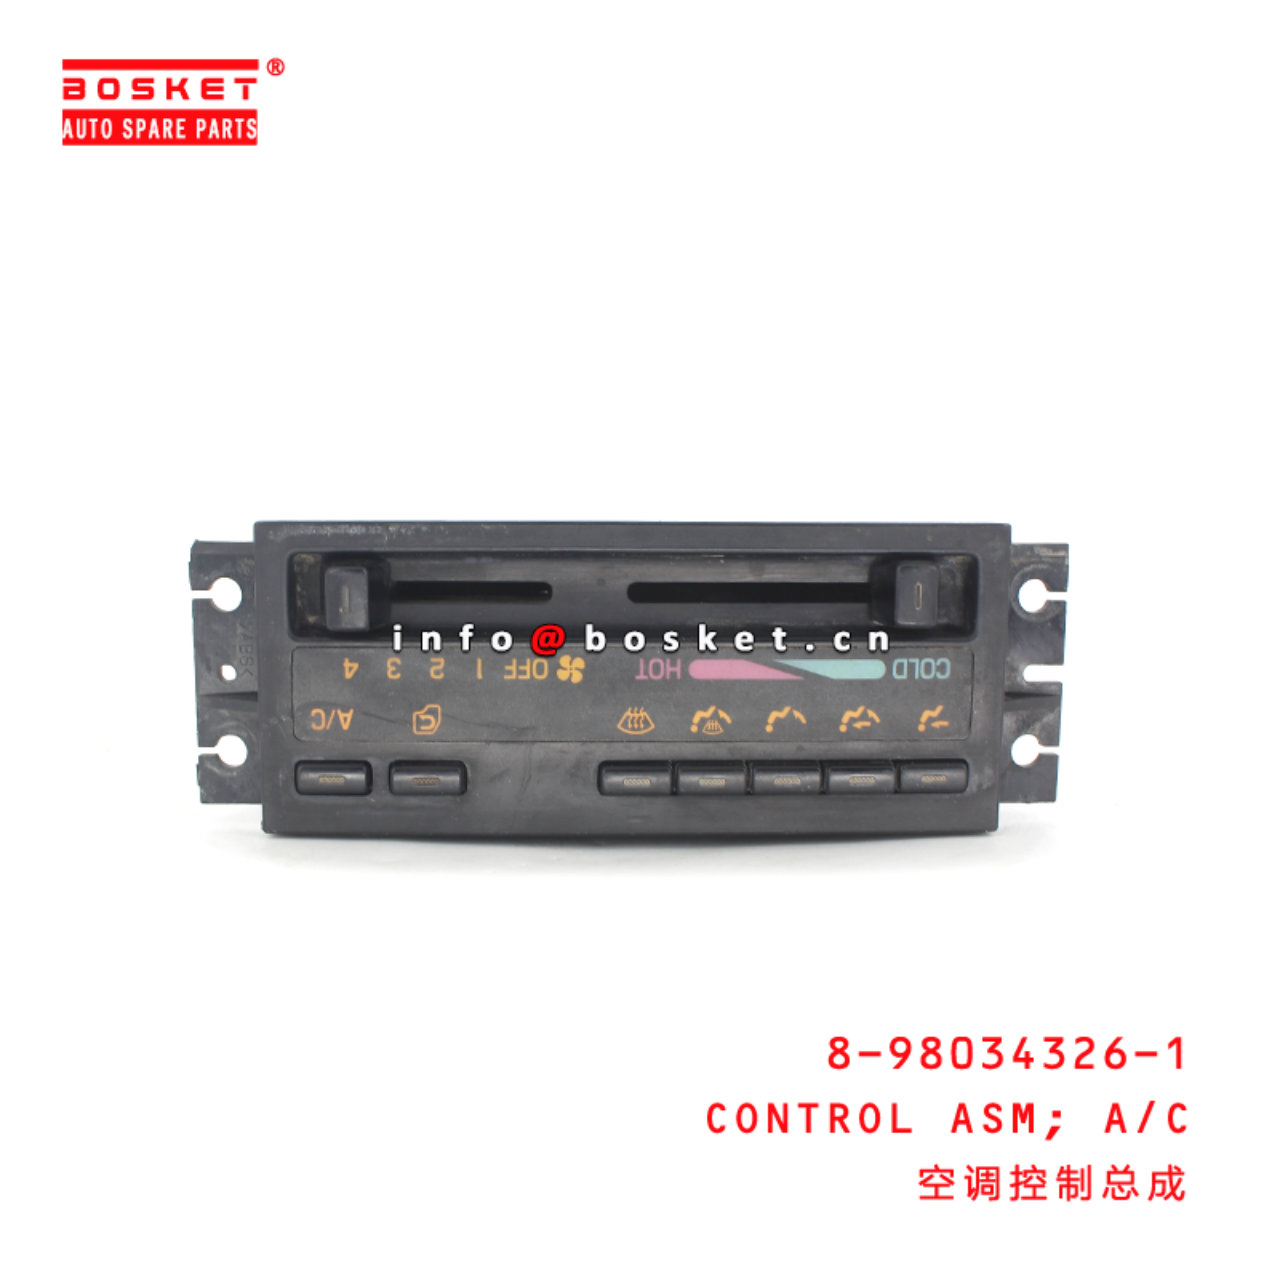 8-98034326-1 A/C Control Assembly Suitable for ISUZU CYZ51 6WF1 8980343261